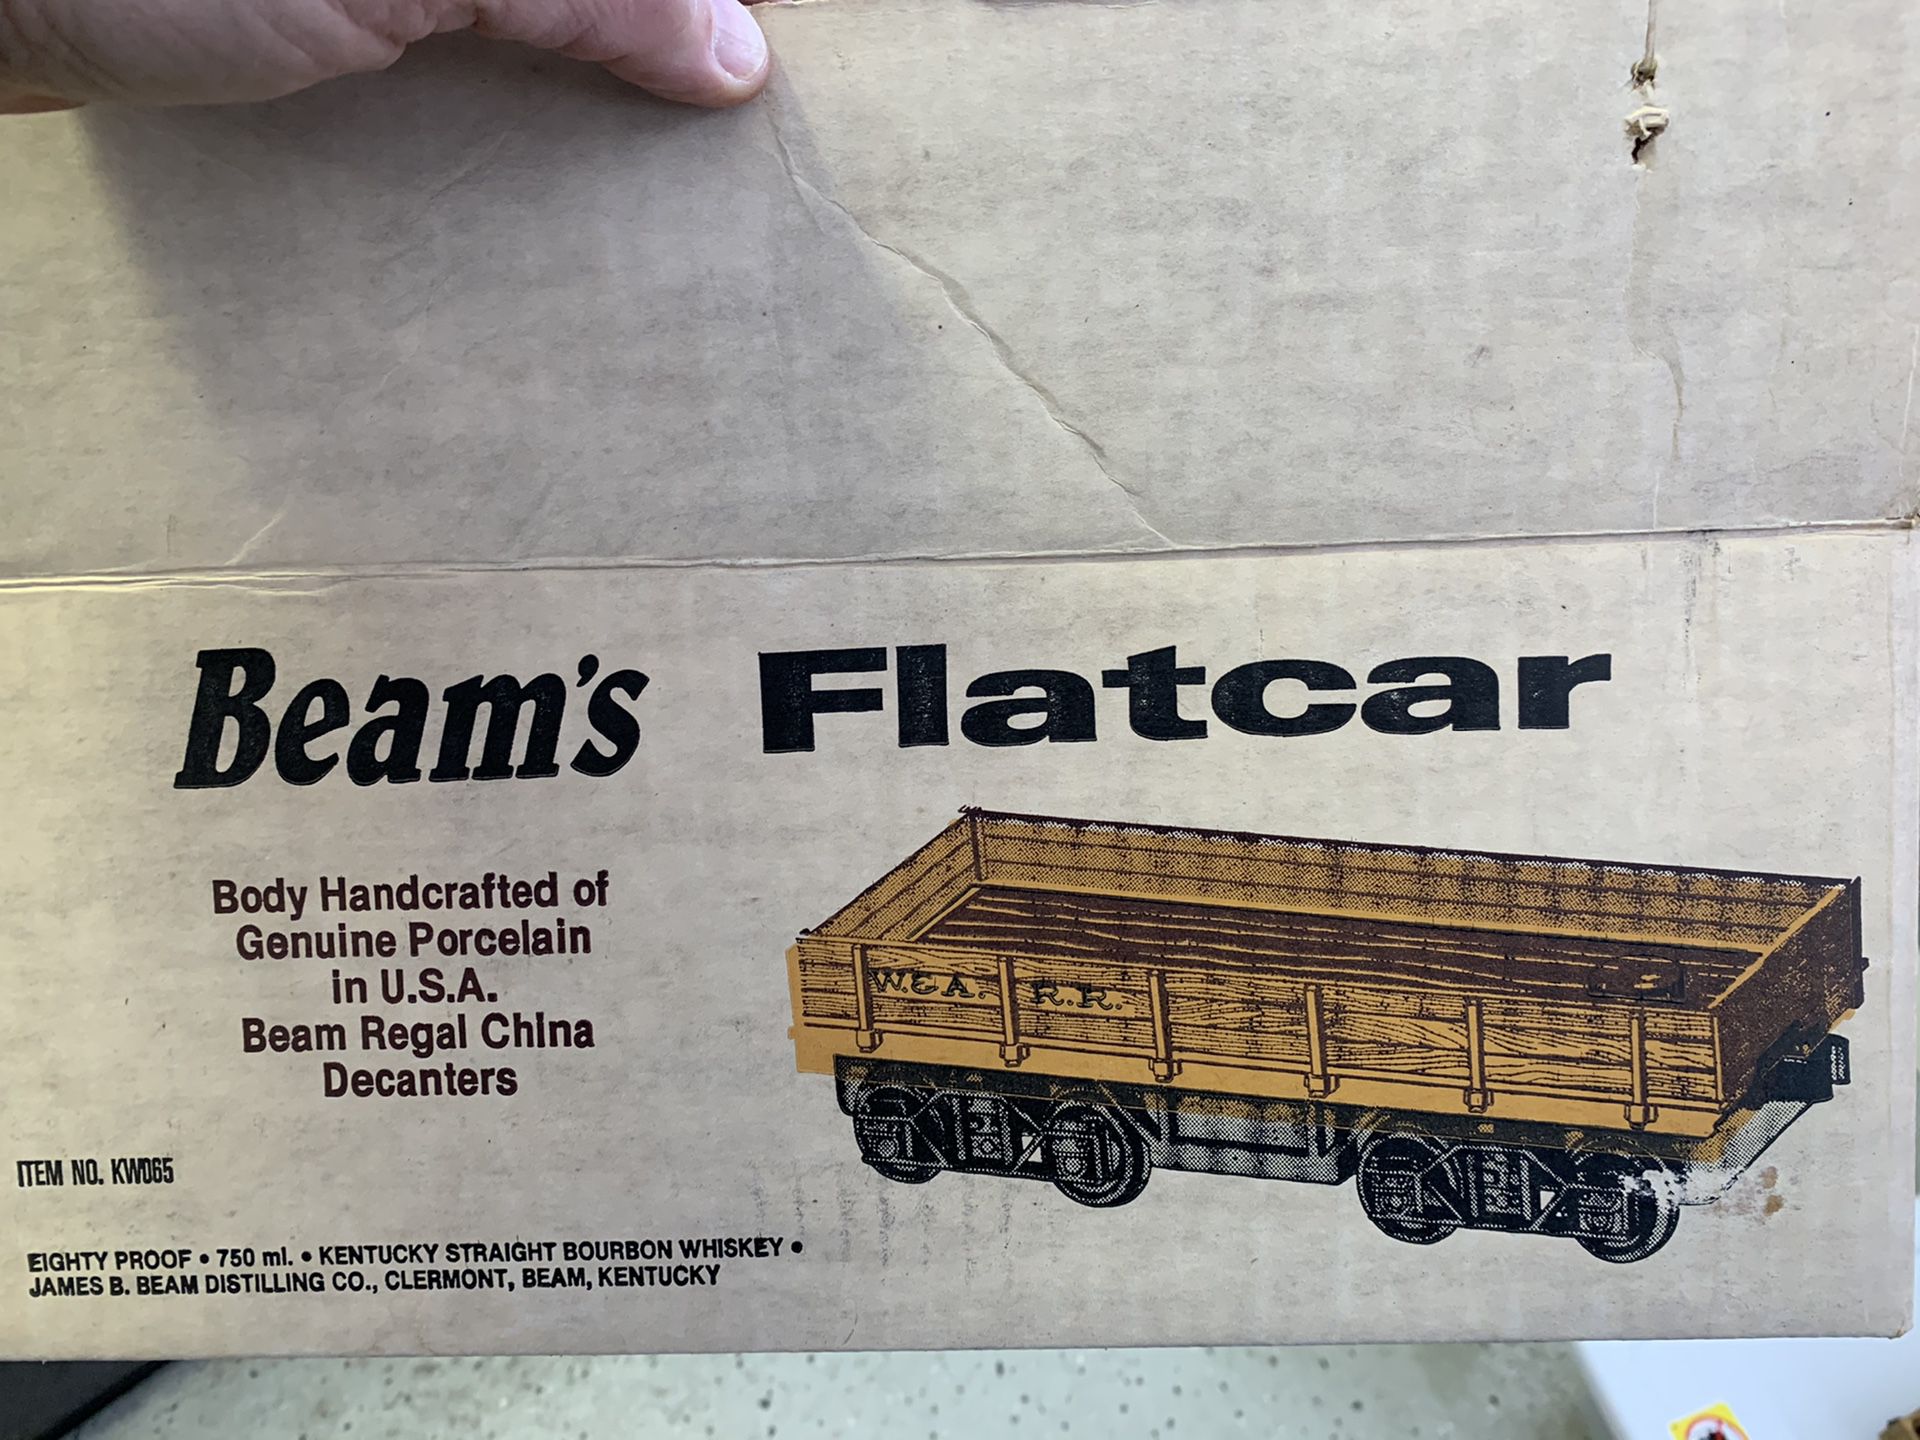 Beam’s Flatcar Decanter